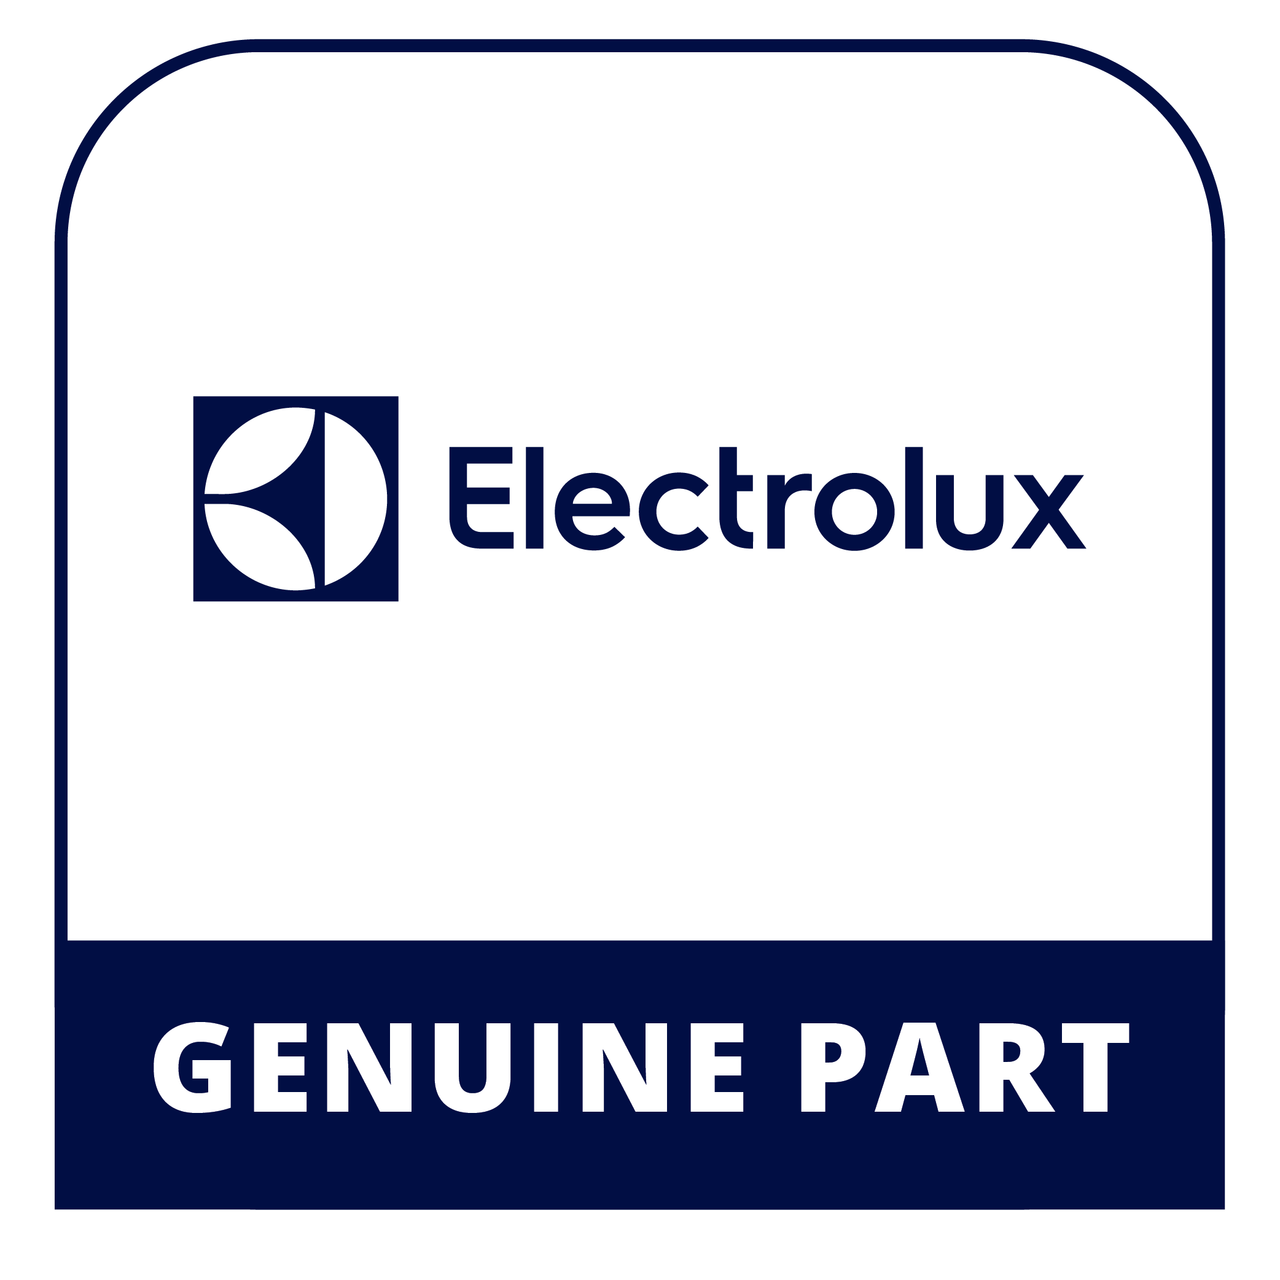 Frigidaire - Electrolux 316460201 - Board - Genuine Electrolux Part